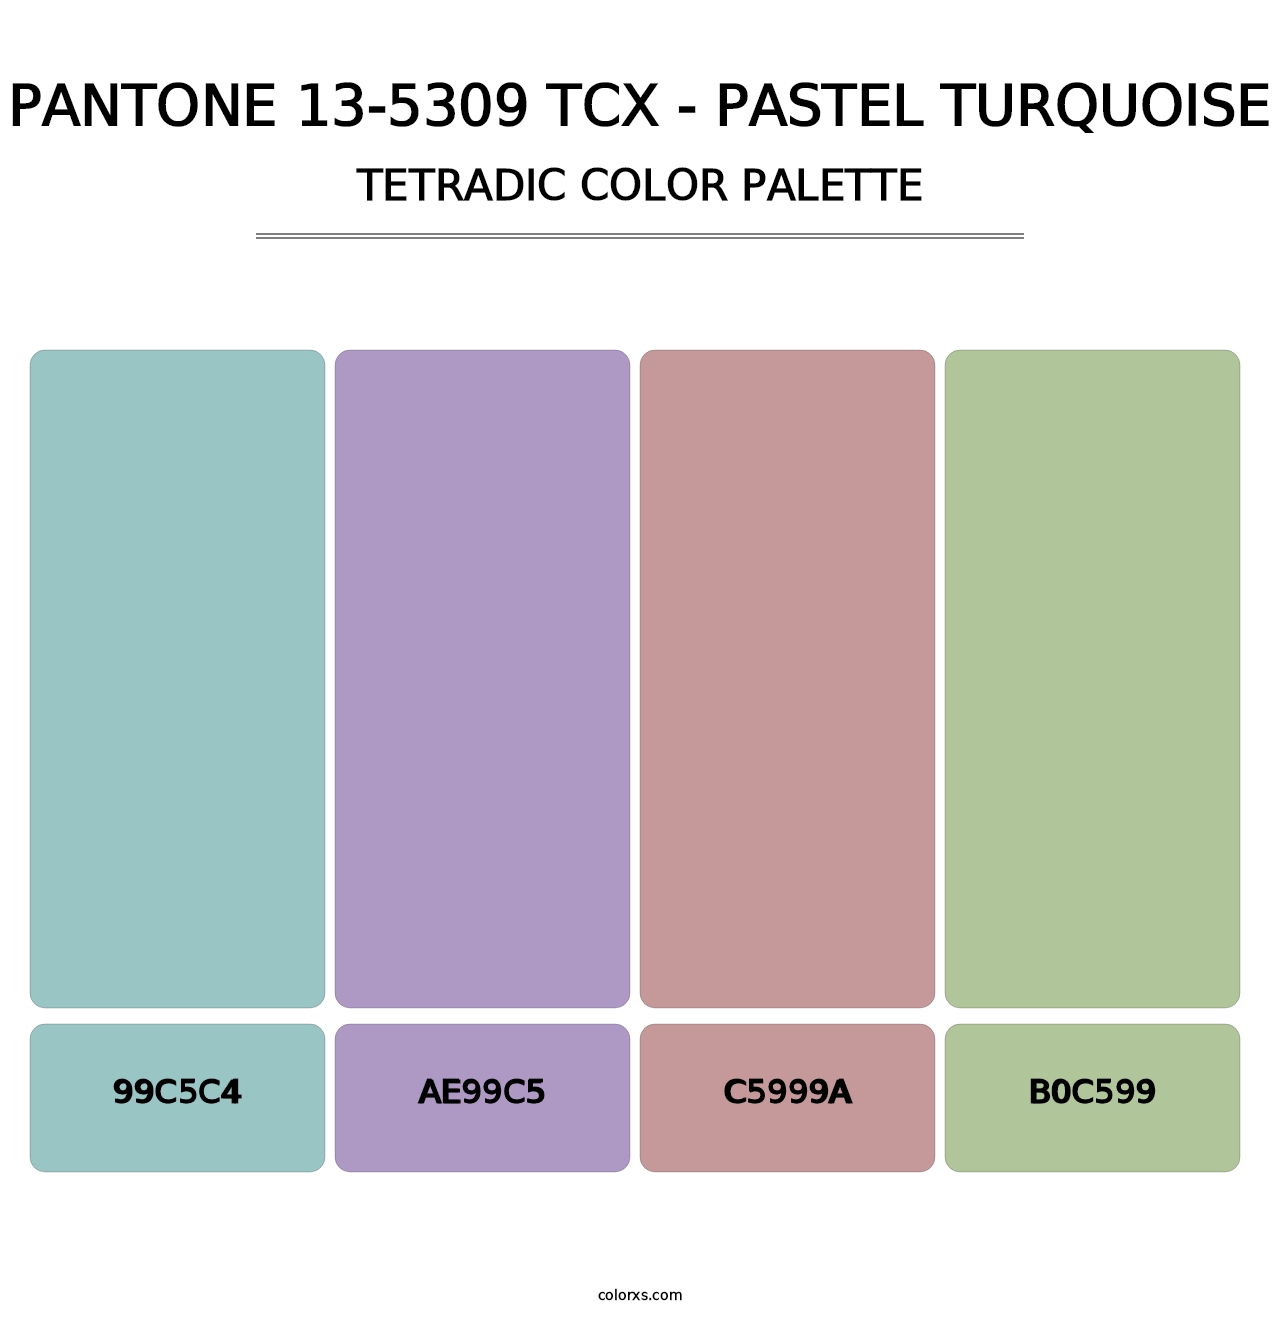 PANTONE 13-5309 TCX - Pastel Turquoise - Tetradic Color Palette